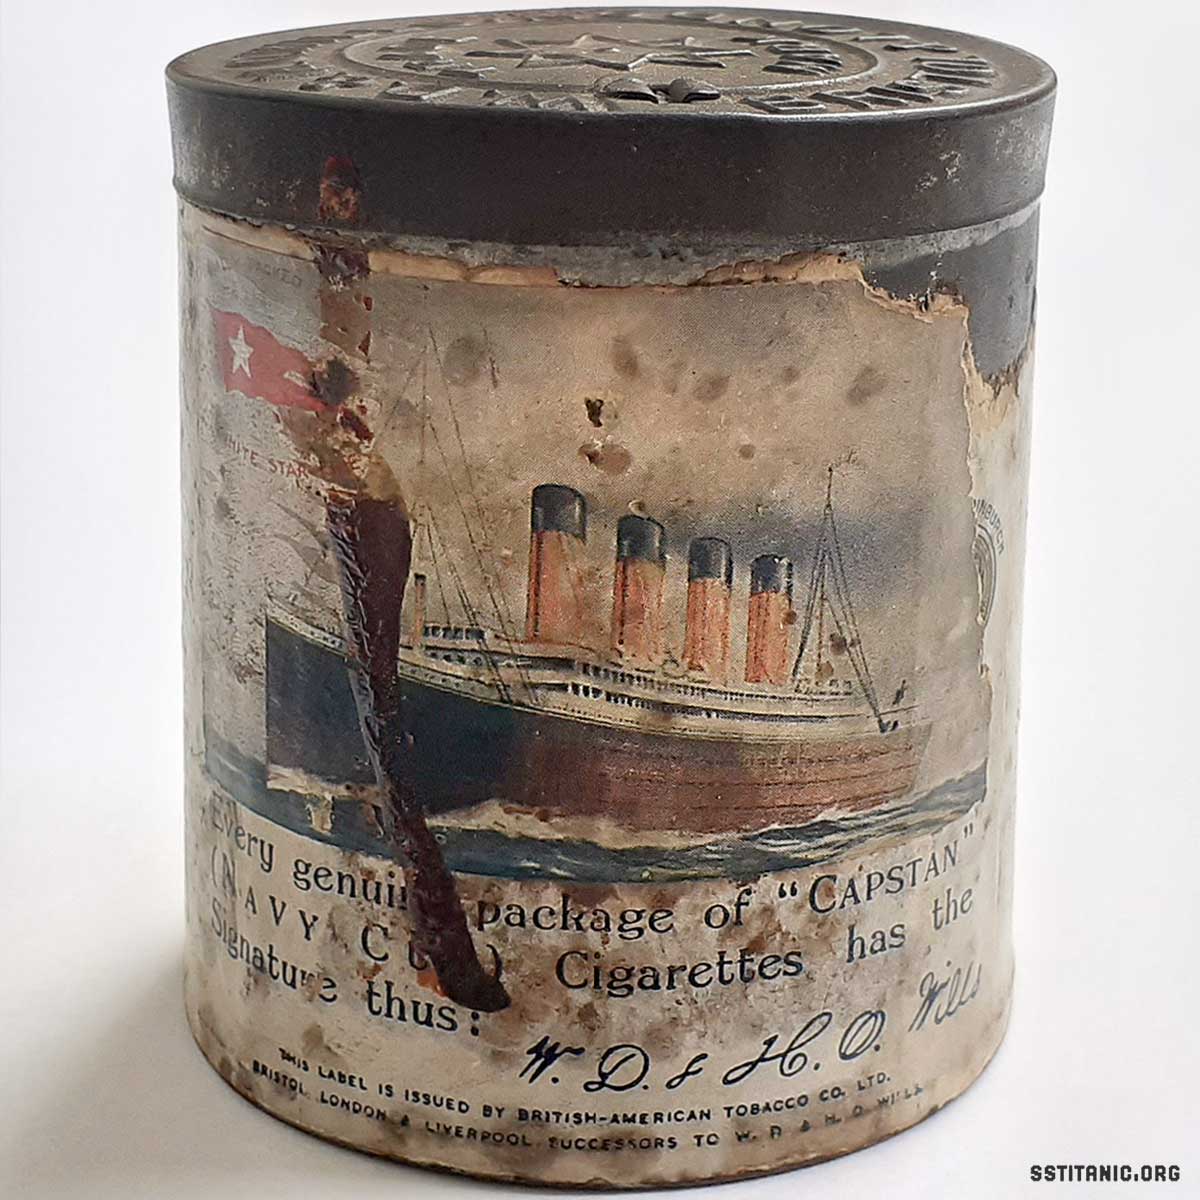 wills capstan navy cut cigarettes tin container titanic 1912